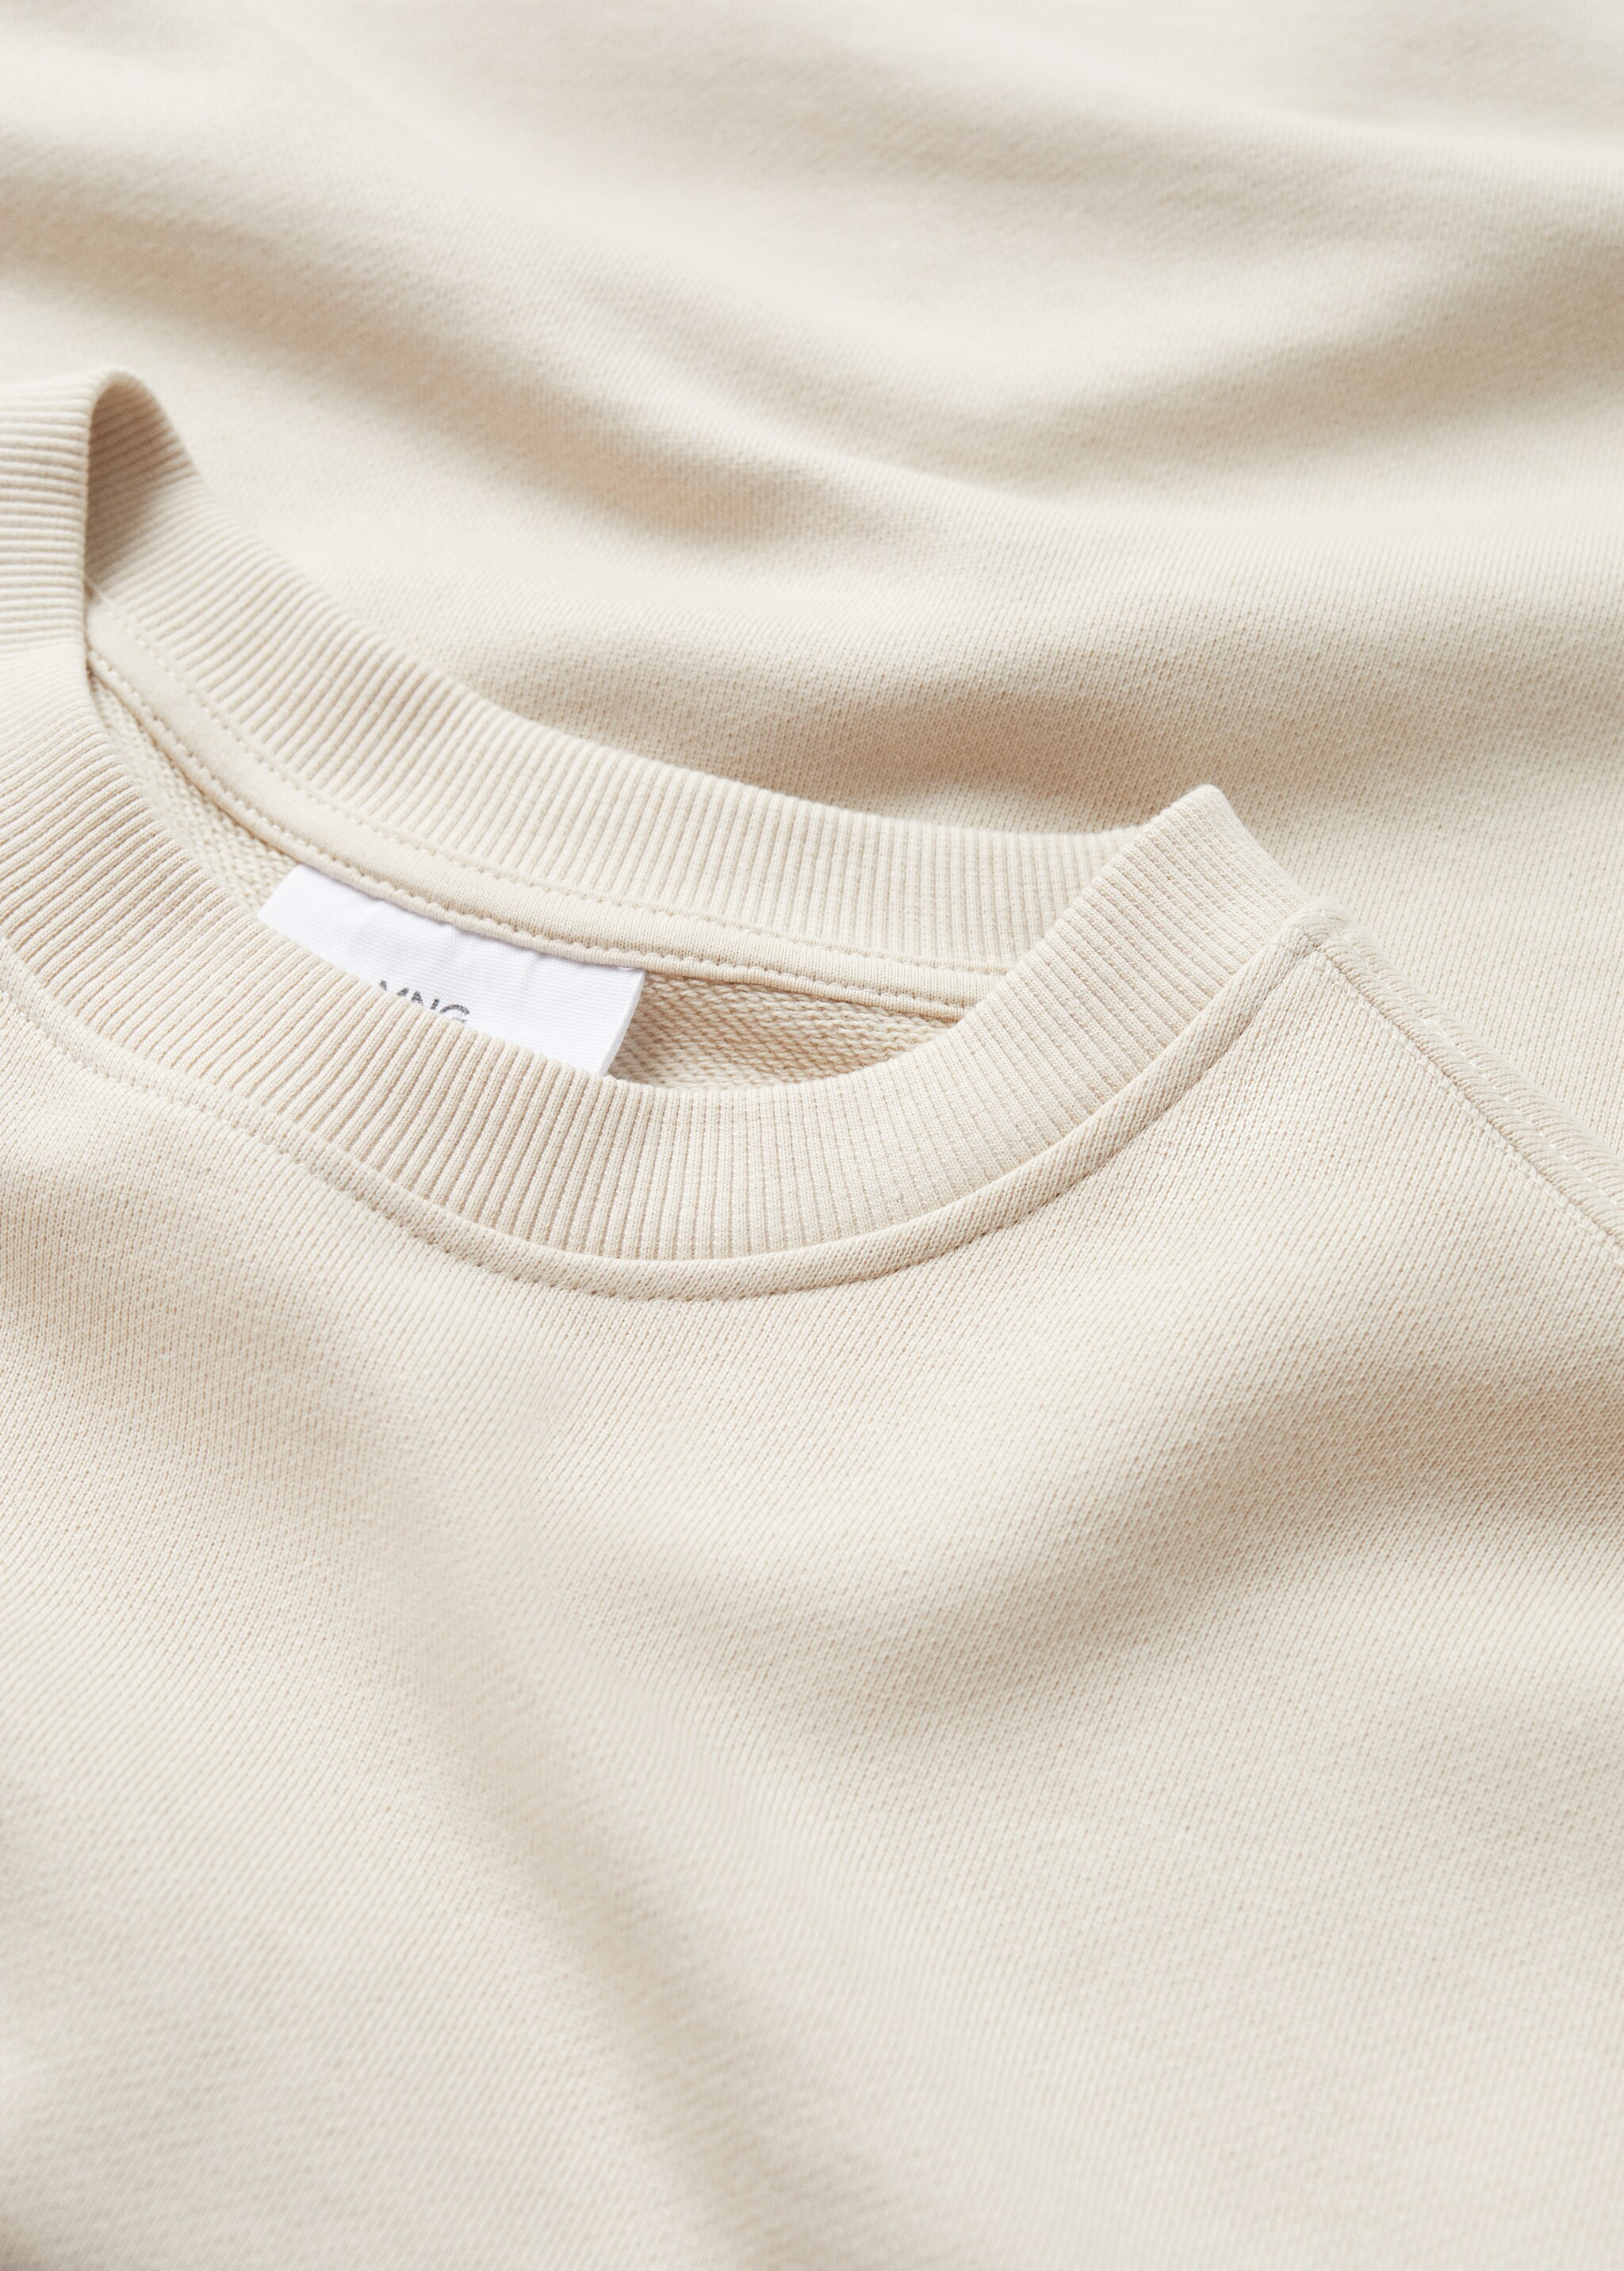 Lightweight cotton sweatshirt - Details of the article 8